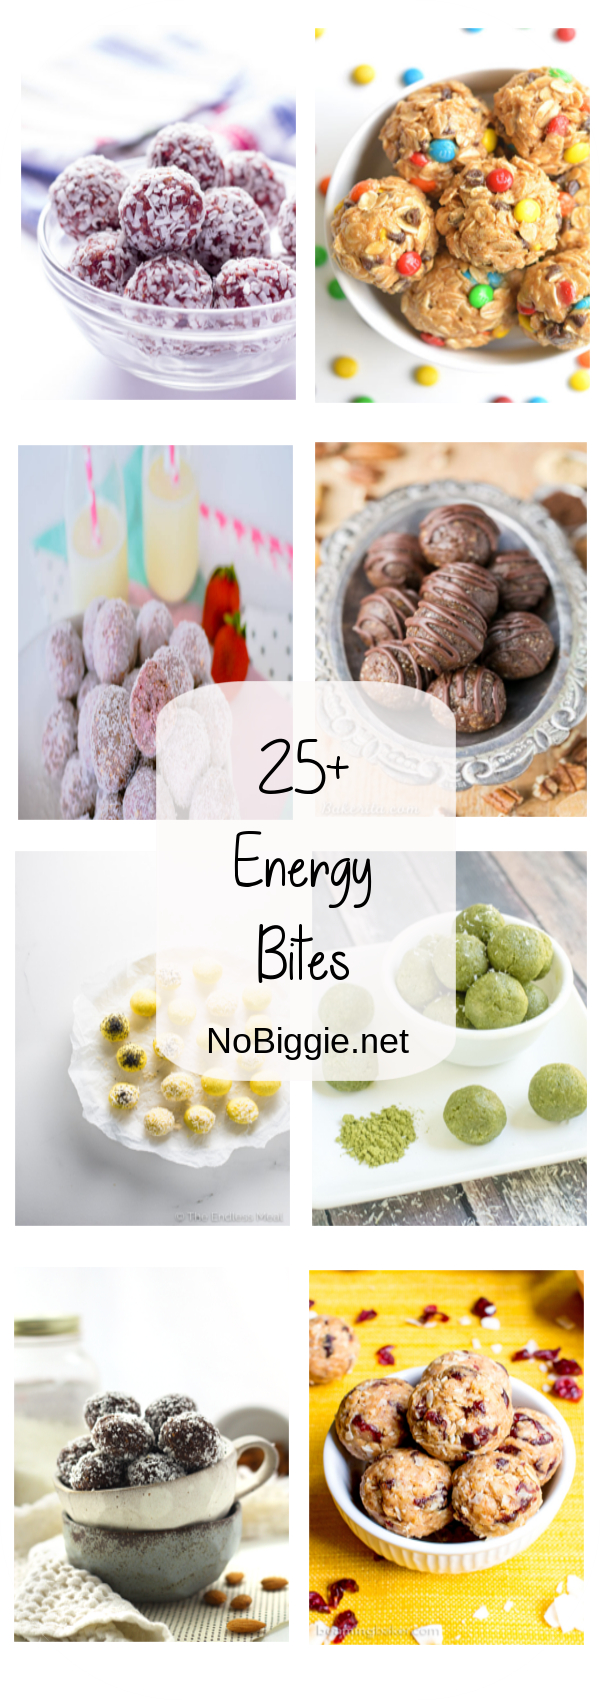 25+ Energy Bites | NoBiggie.net